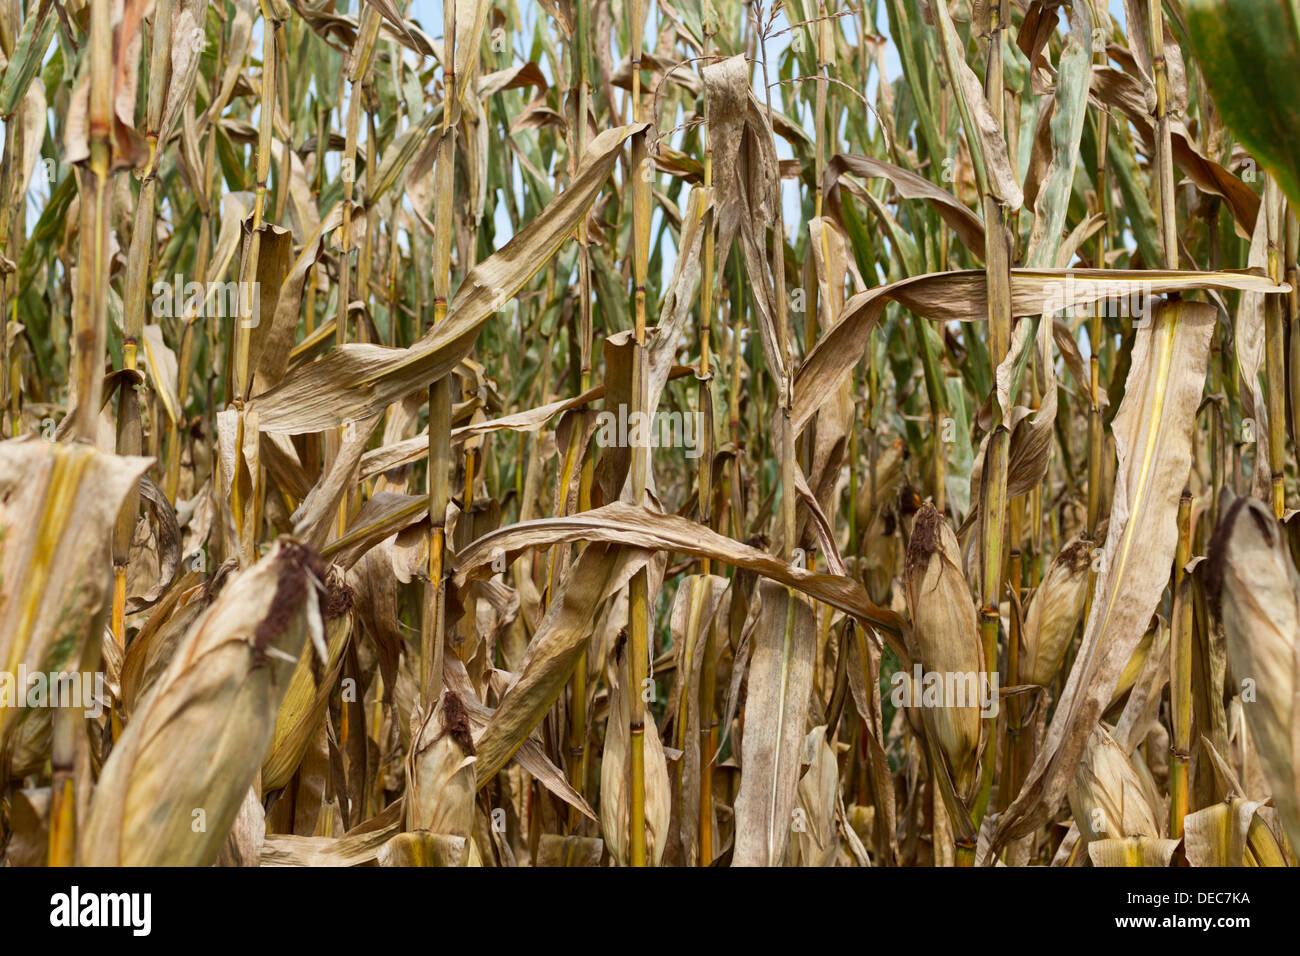 Yellowing corn stalks in a field Stock Photo